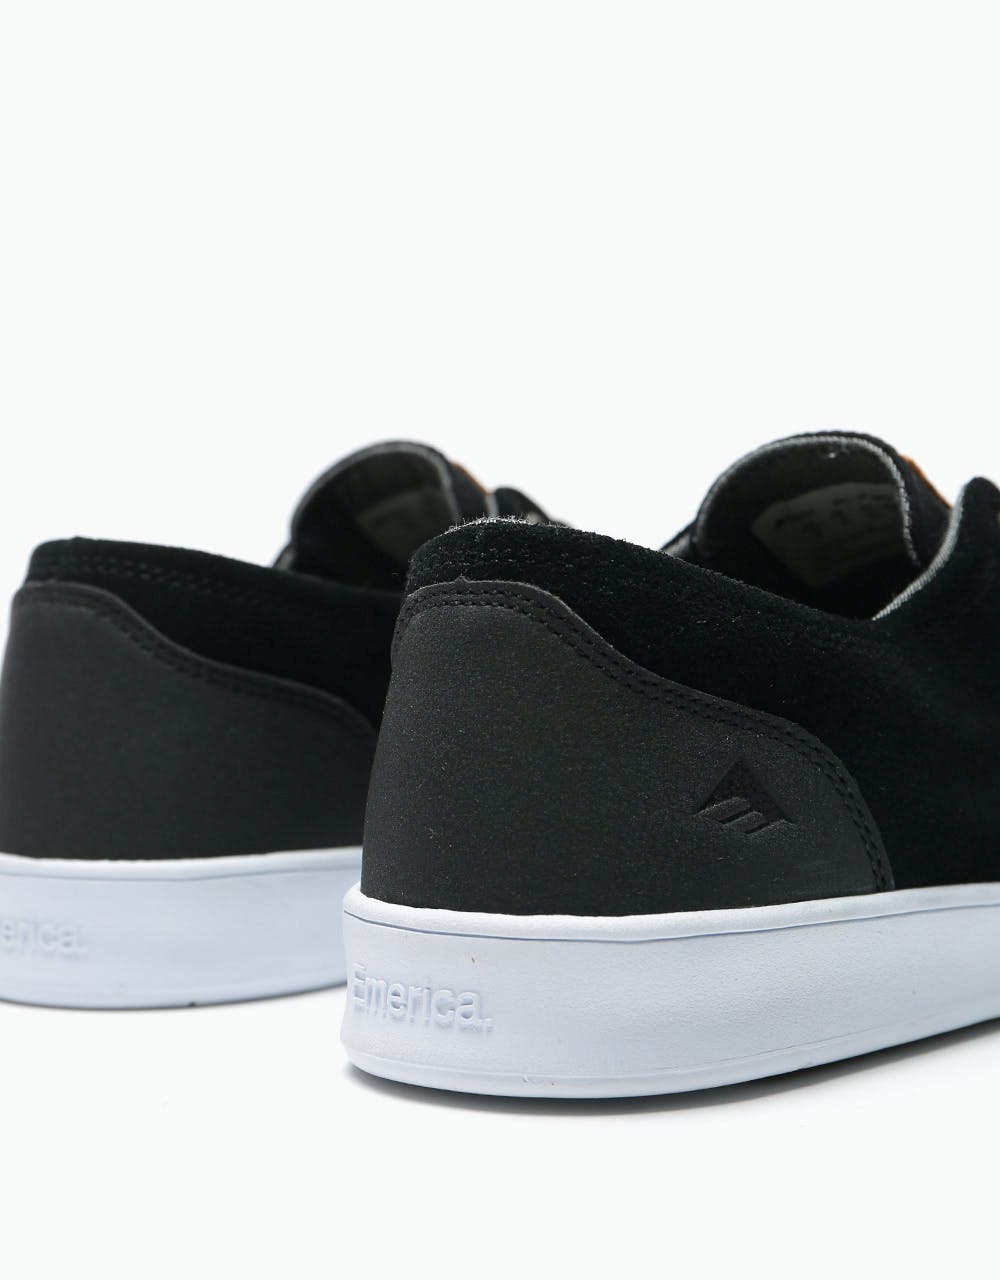 Emerica The Romero Laced Skate Shoes - Black/Black/White